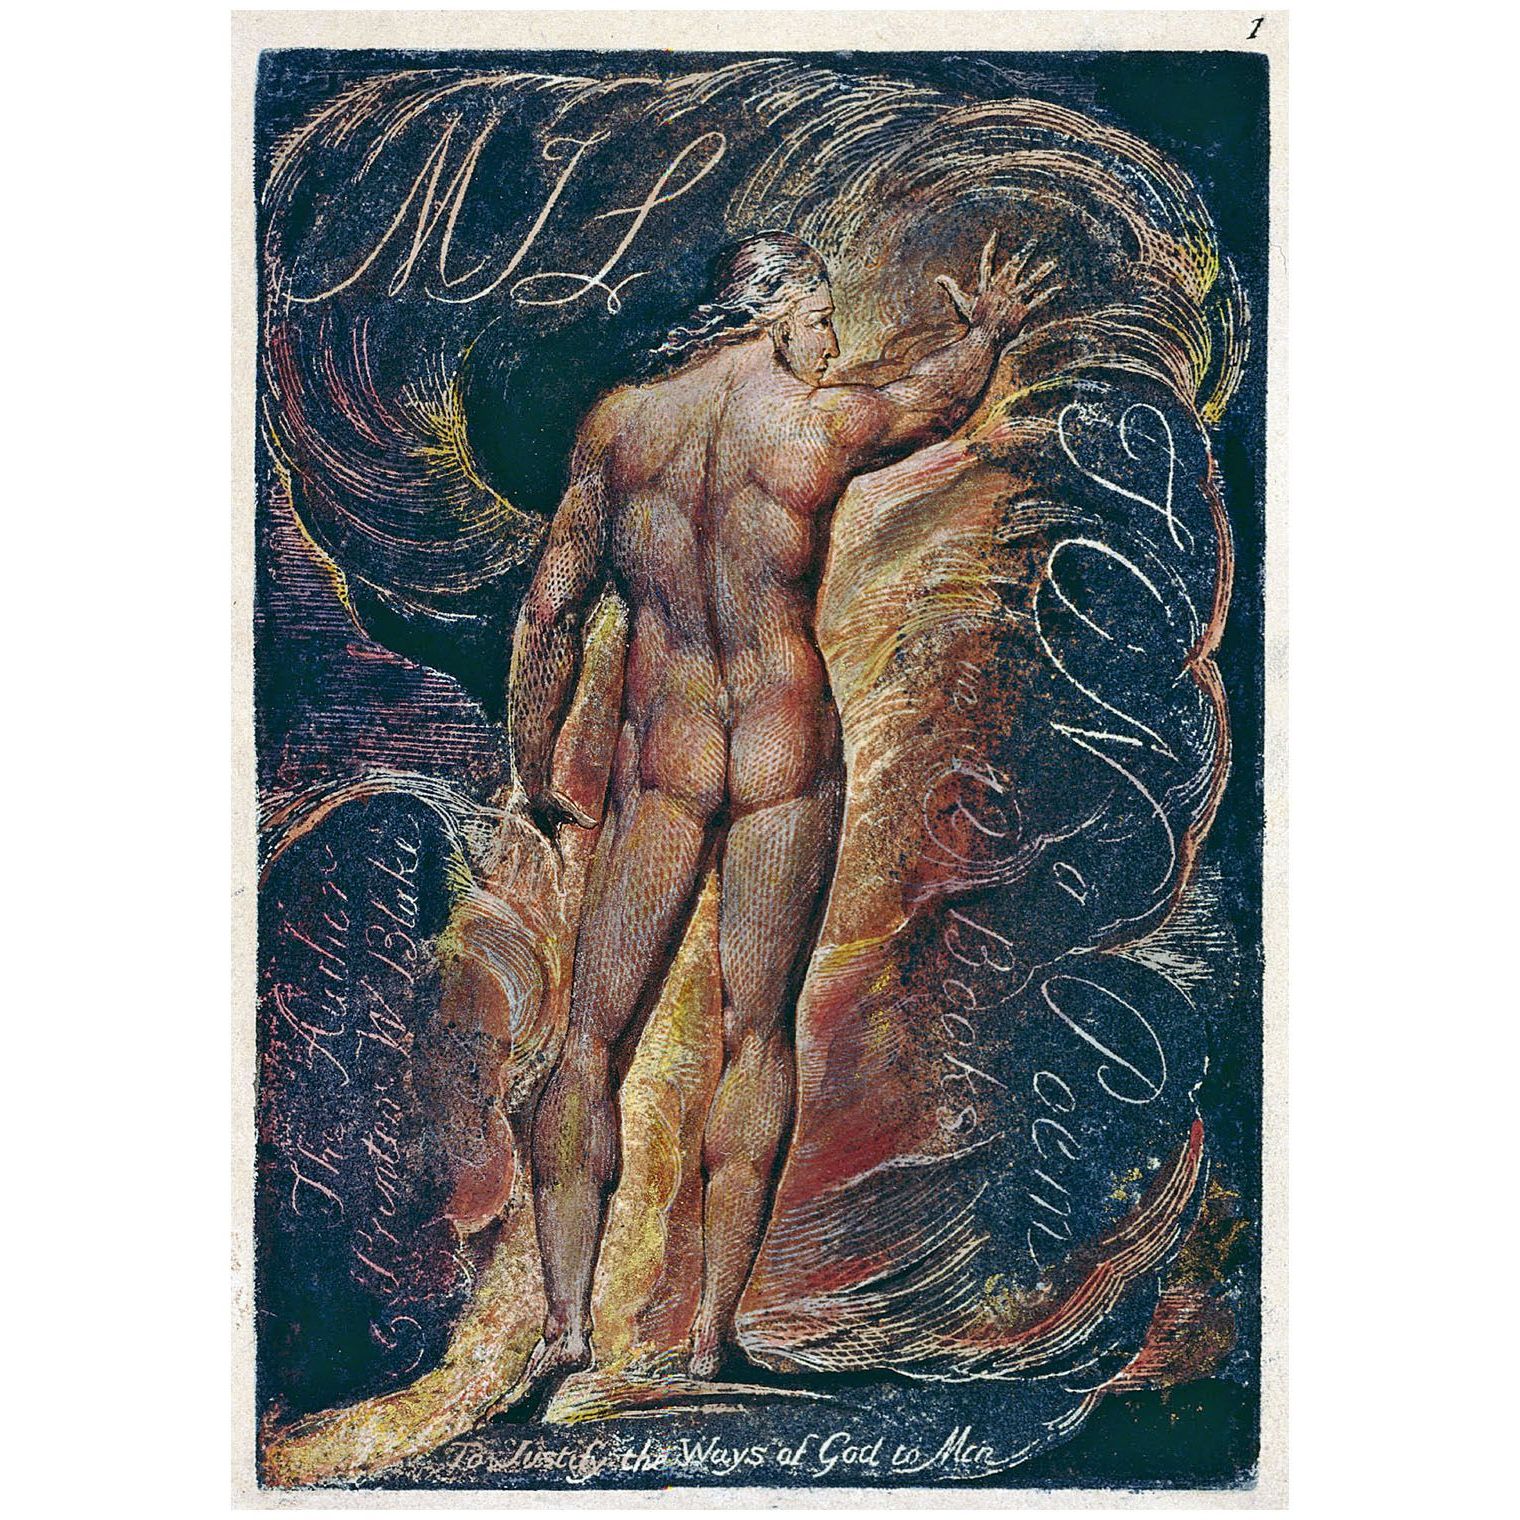 William Blake. Milton. A Poem, p.1. 1818. Library of Congress, Washington